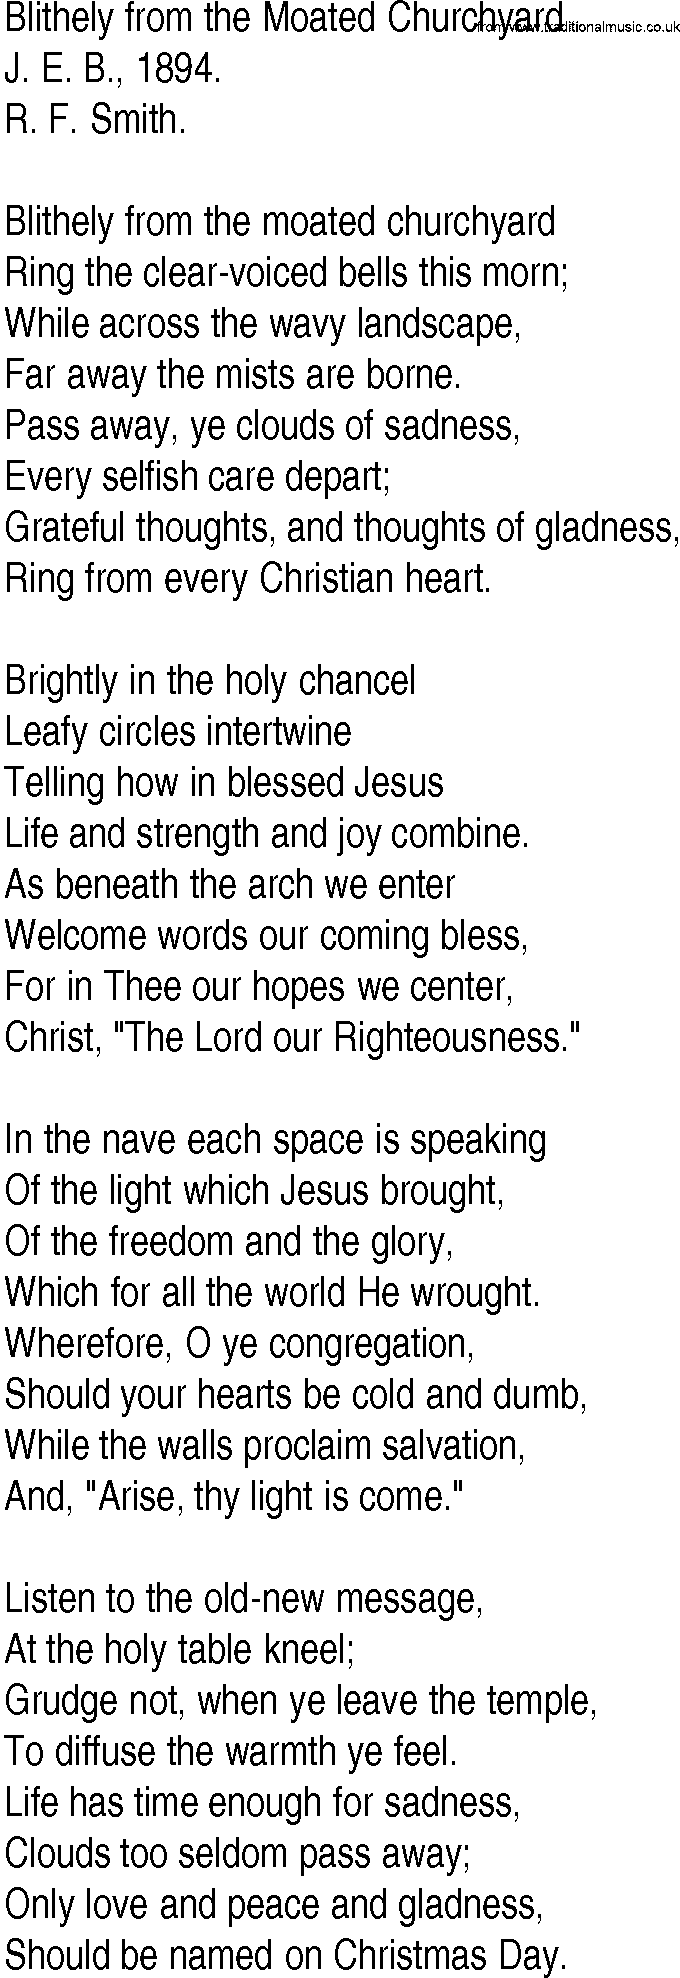 Hymn and Gospel Song: Blithely from the Moated Churchyard by J E B lyrics